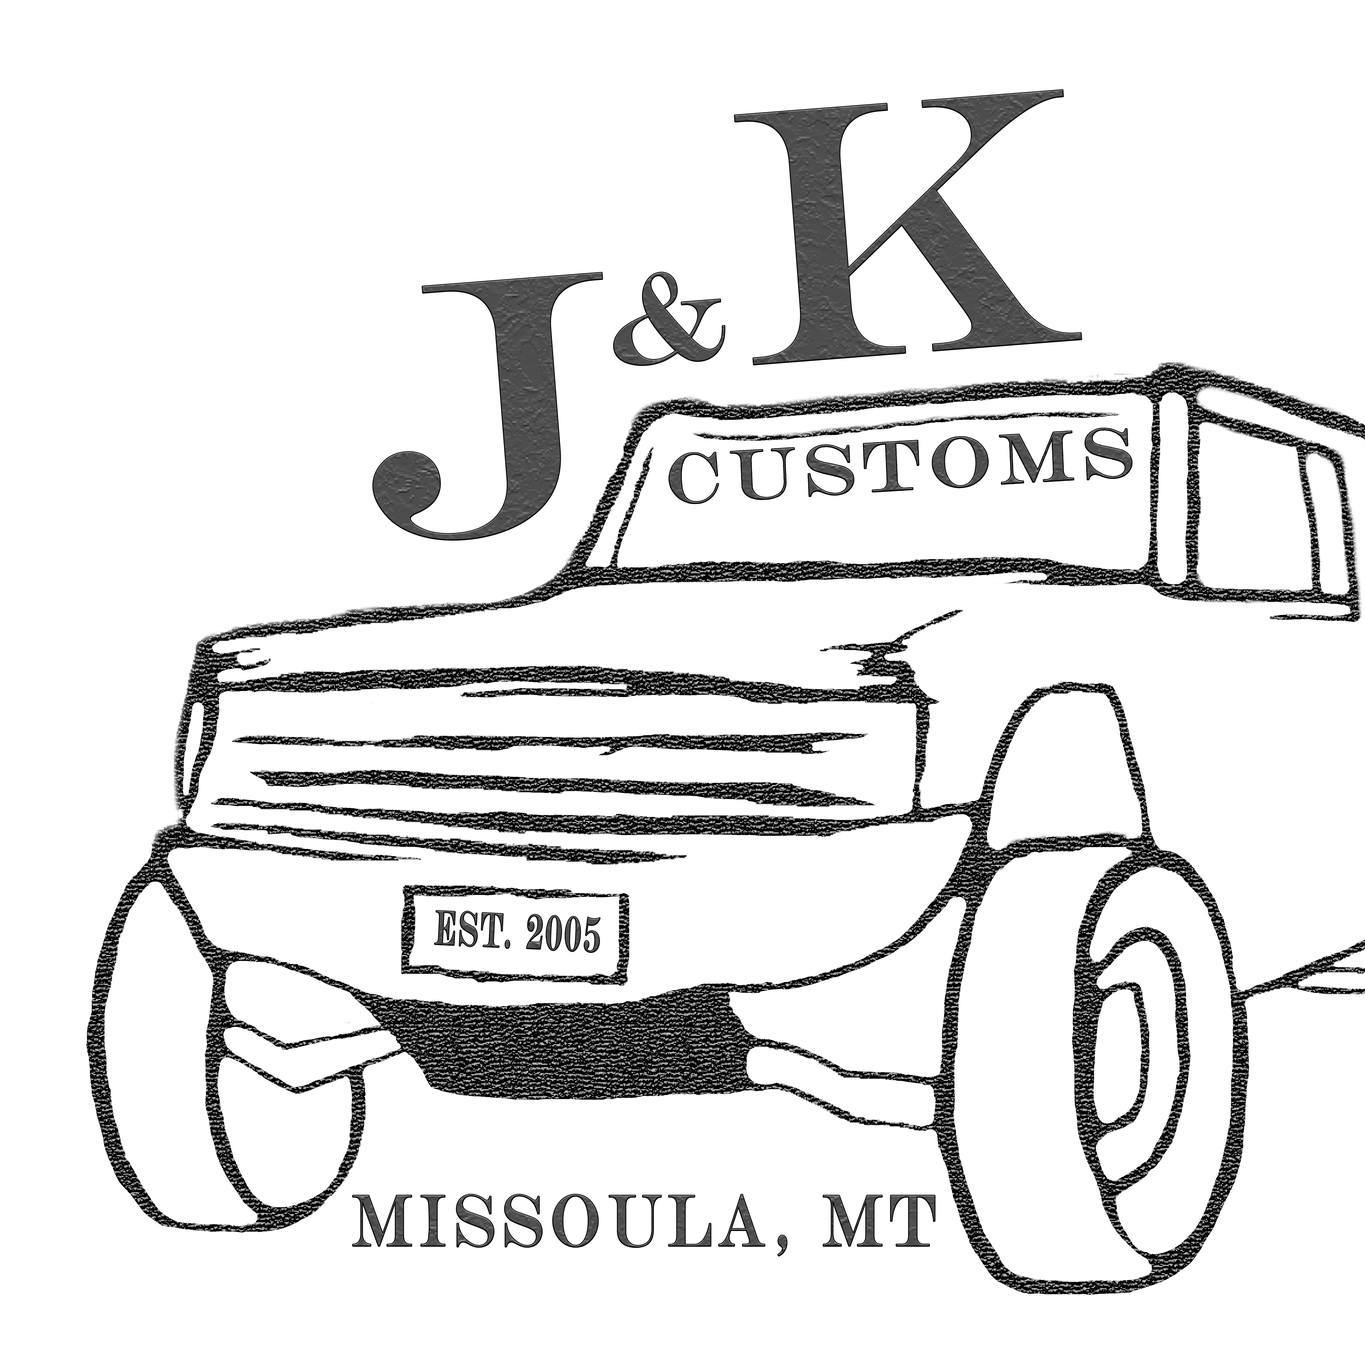 J&K Customs in Missoula, Montana